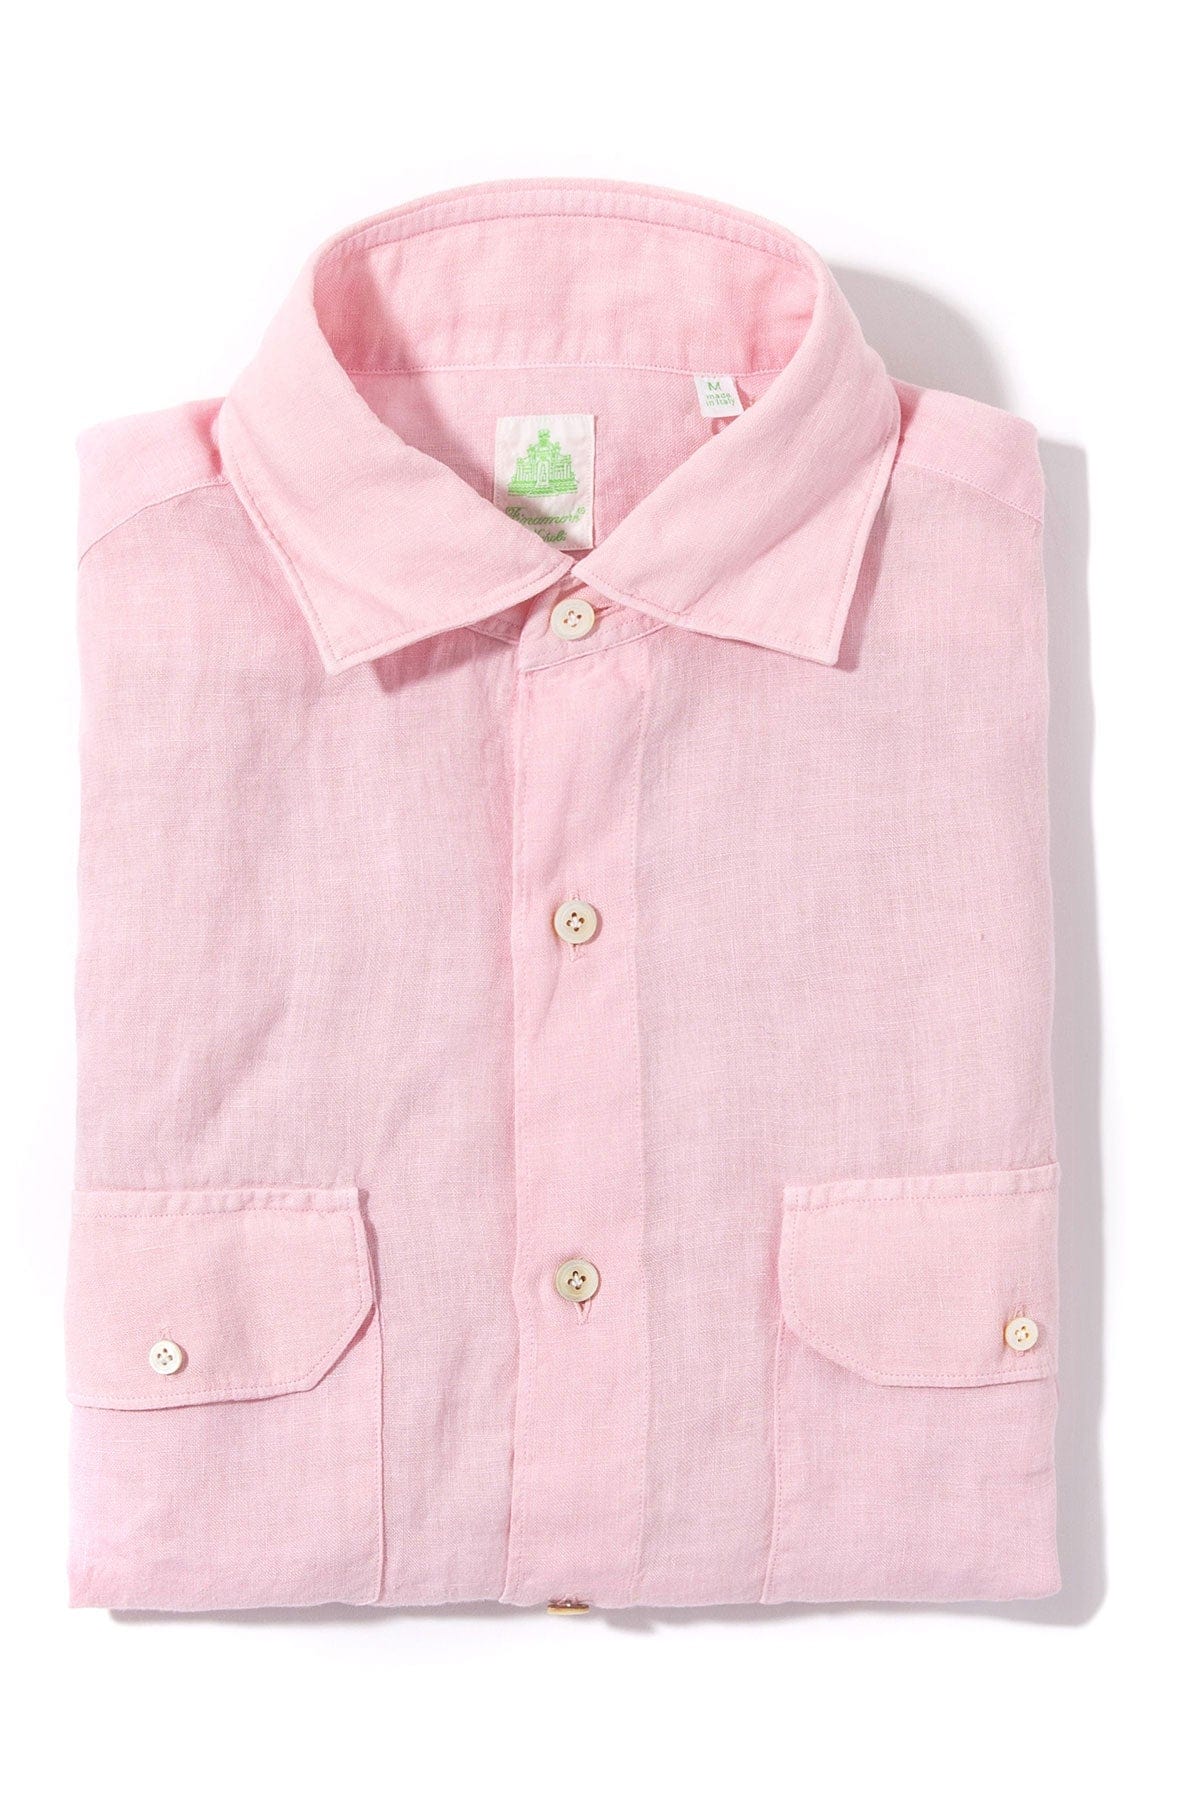 Otztal 2 Pocket Shirt In Pink - AXEL'S